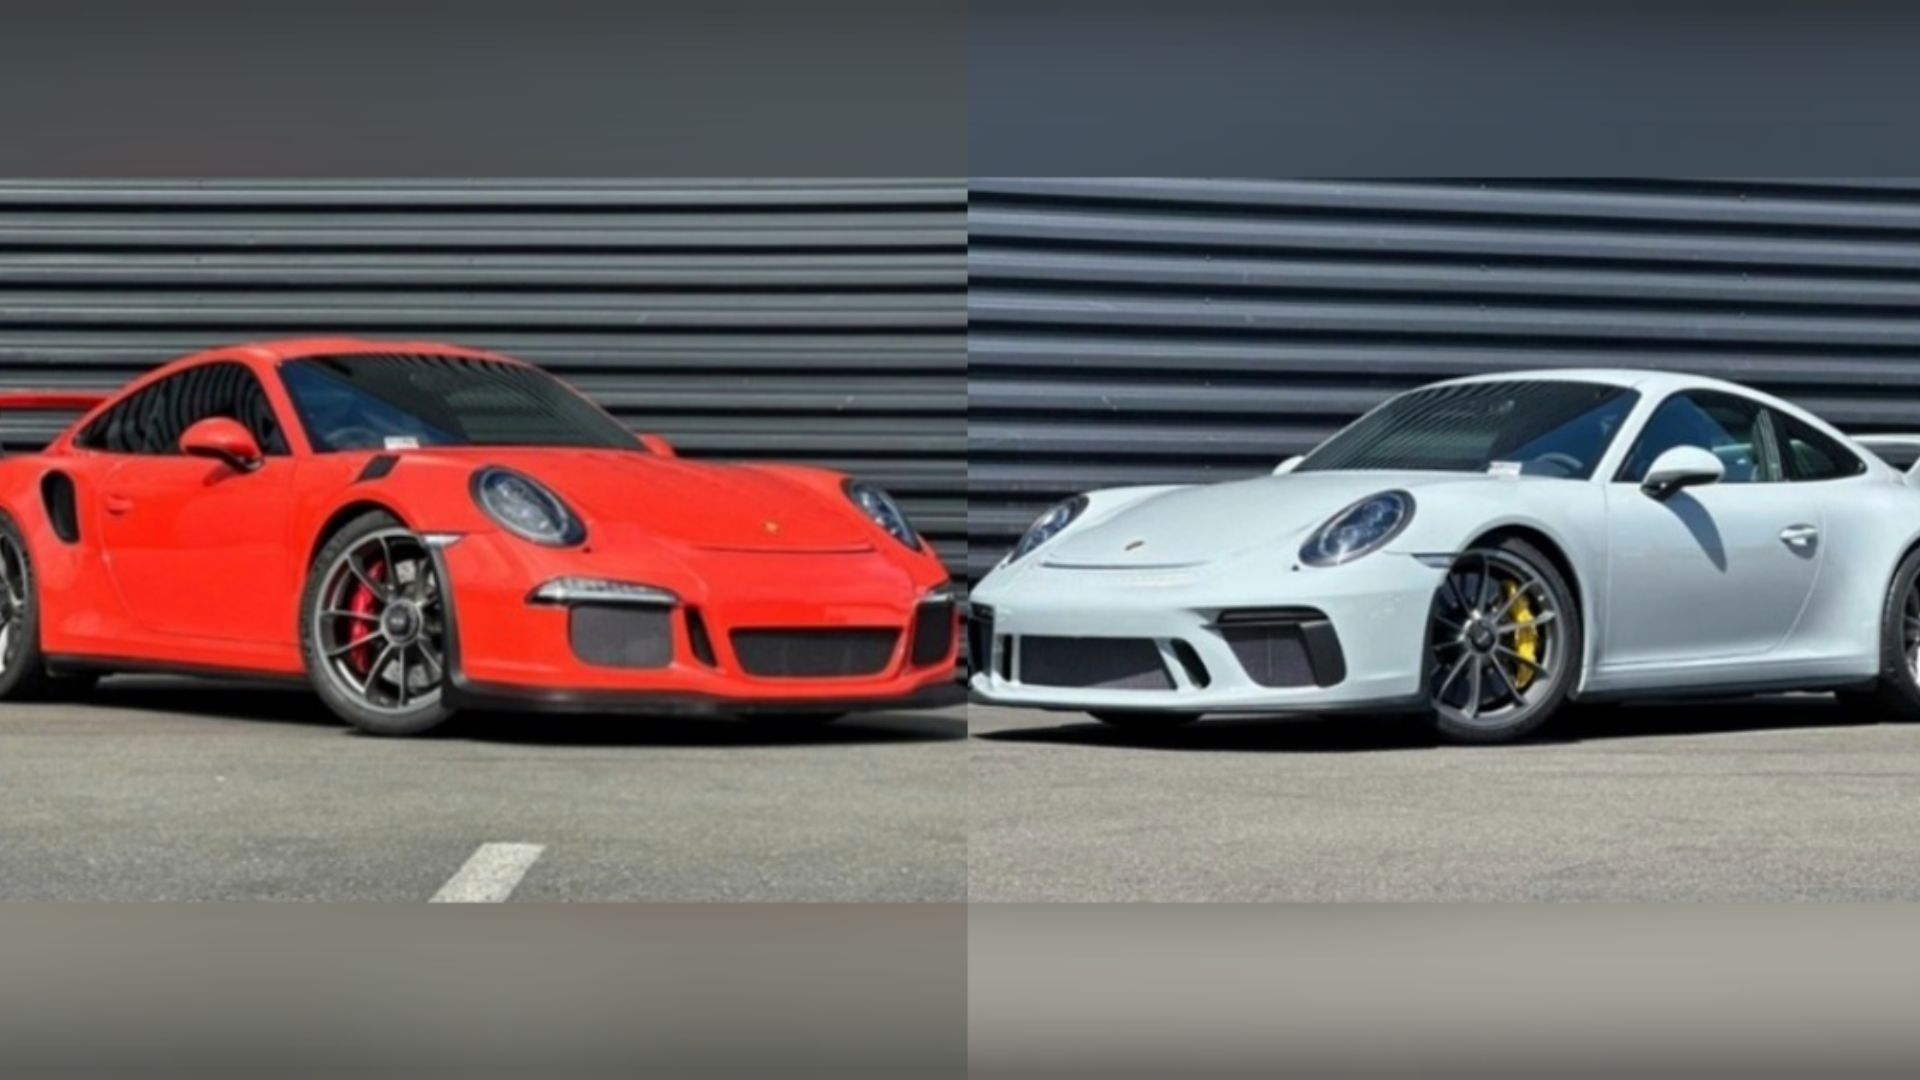 Two Porsche 911 GT3 Models Worth Over $500K Stolen in California